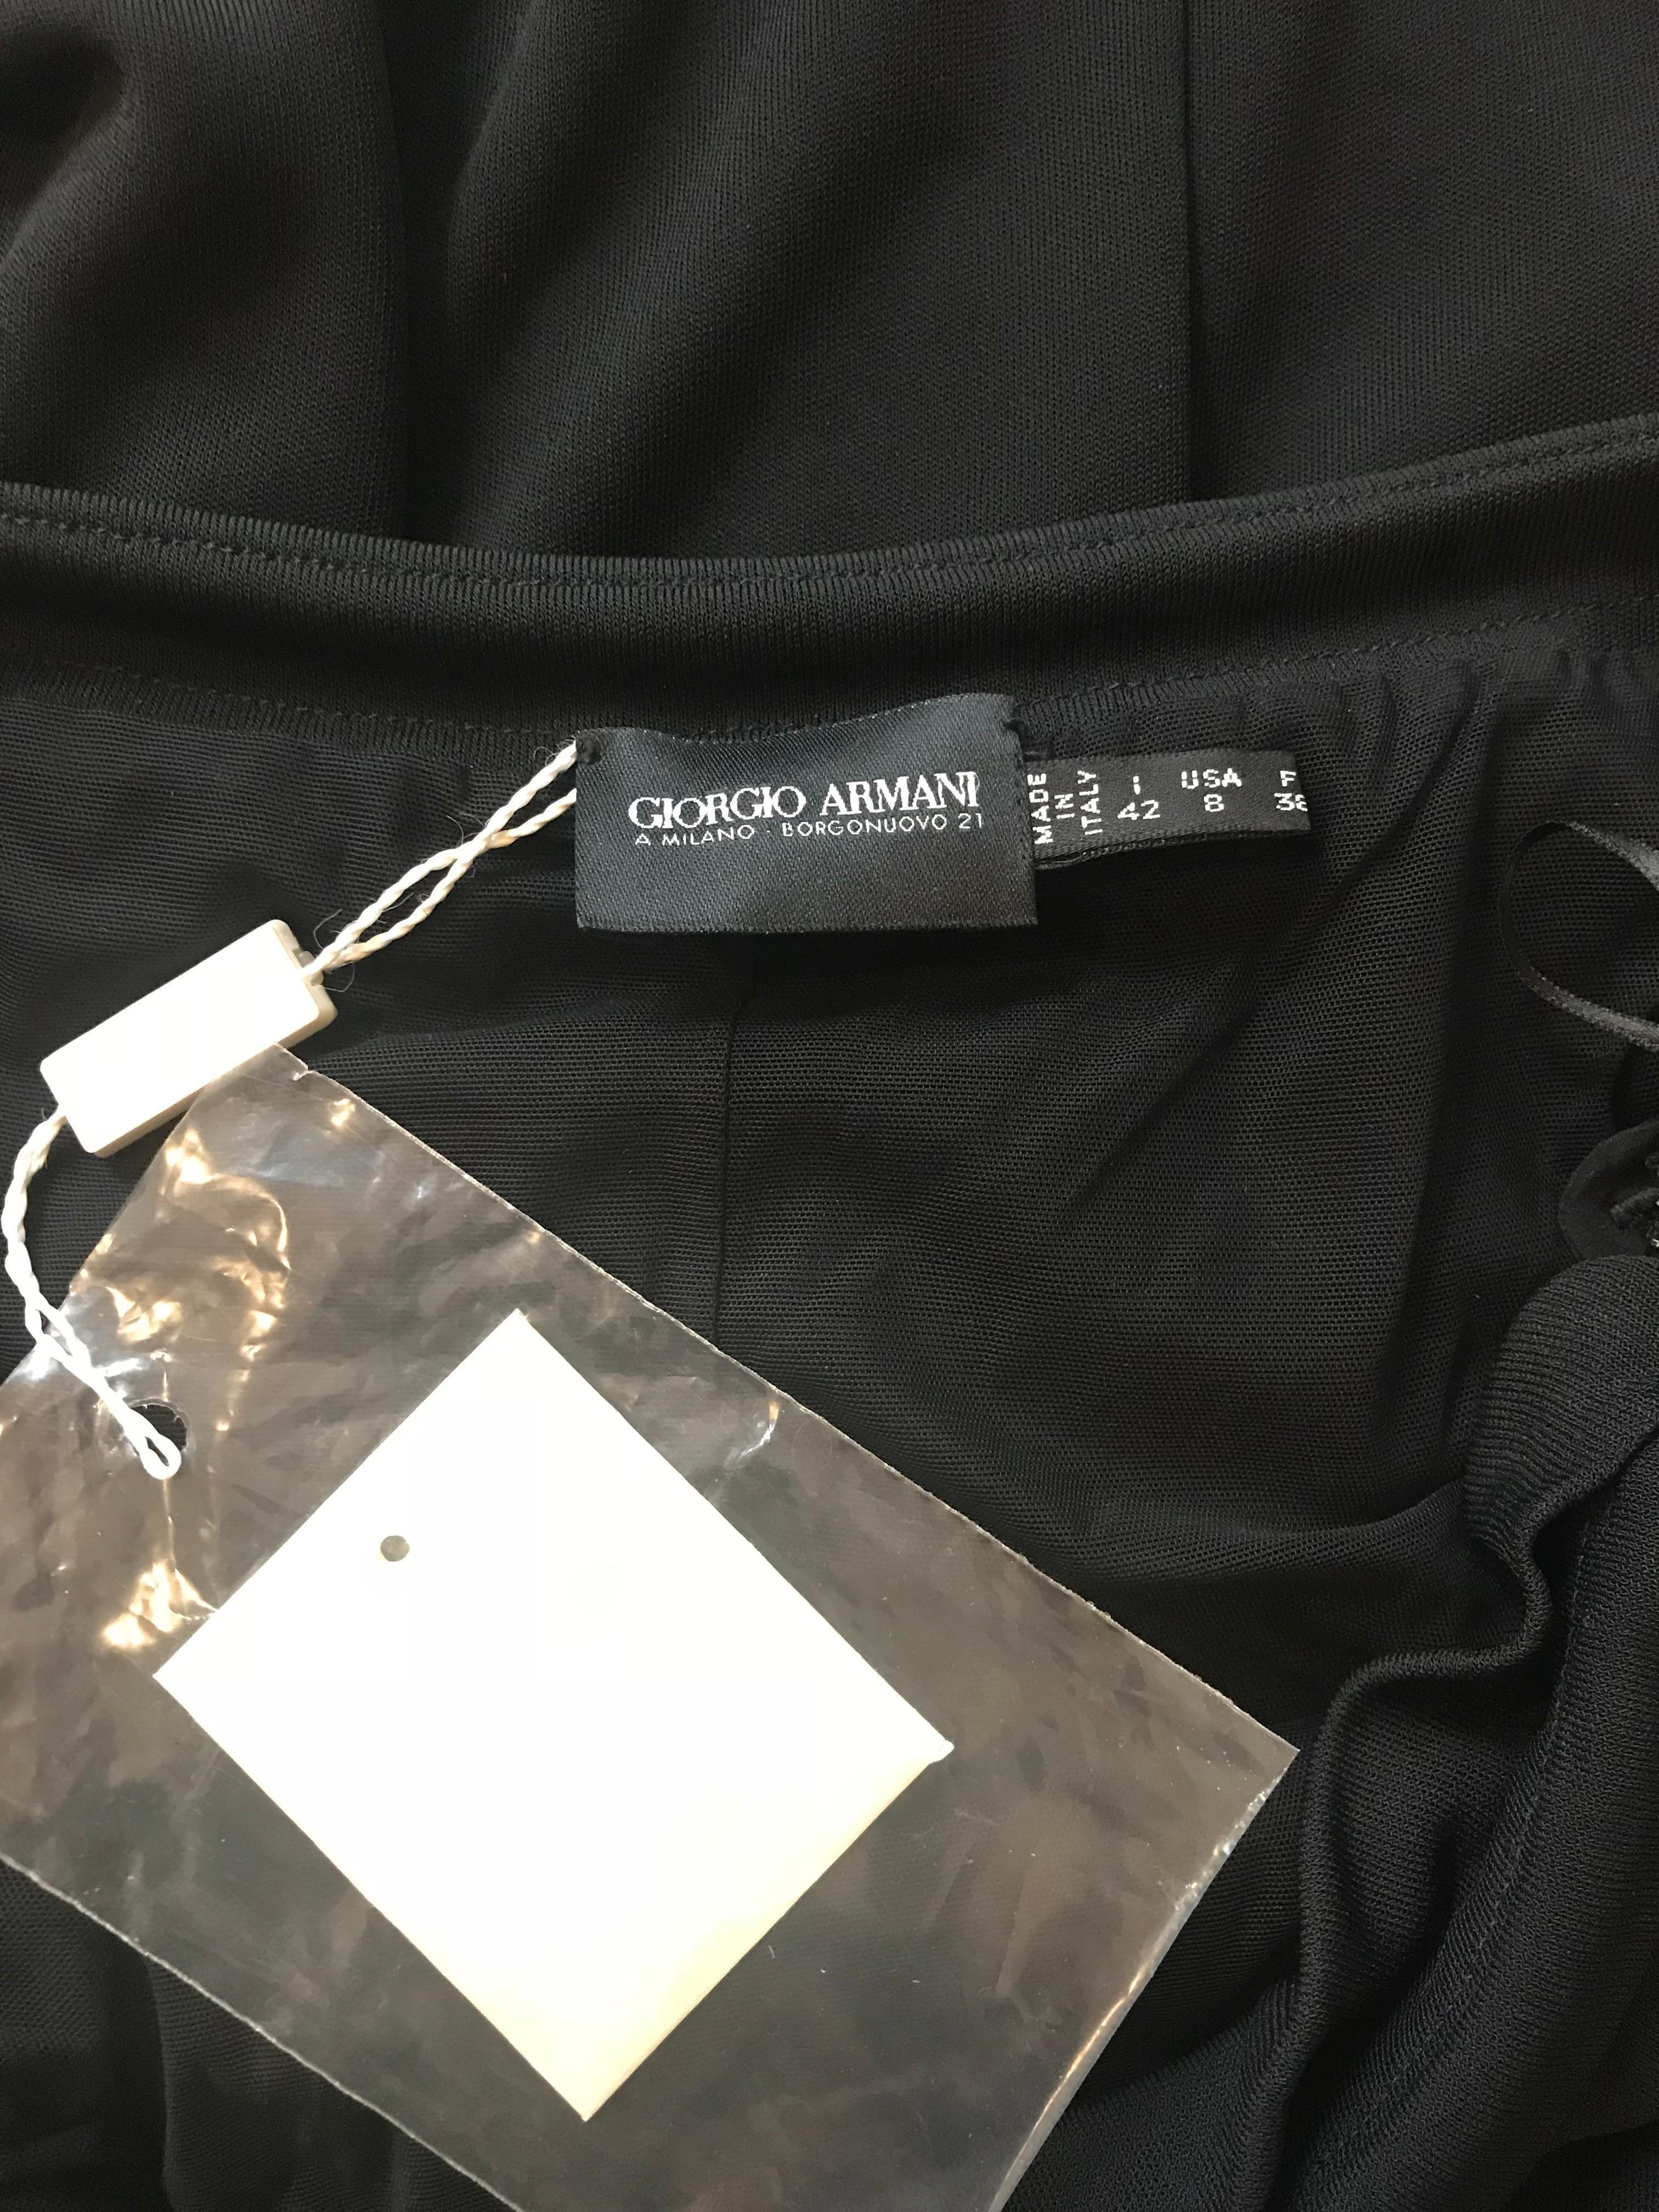 Giorgio Armani Unworn 1990s Black Midi Skirt with Pleat Detail at Waist For Sale 3